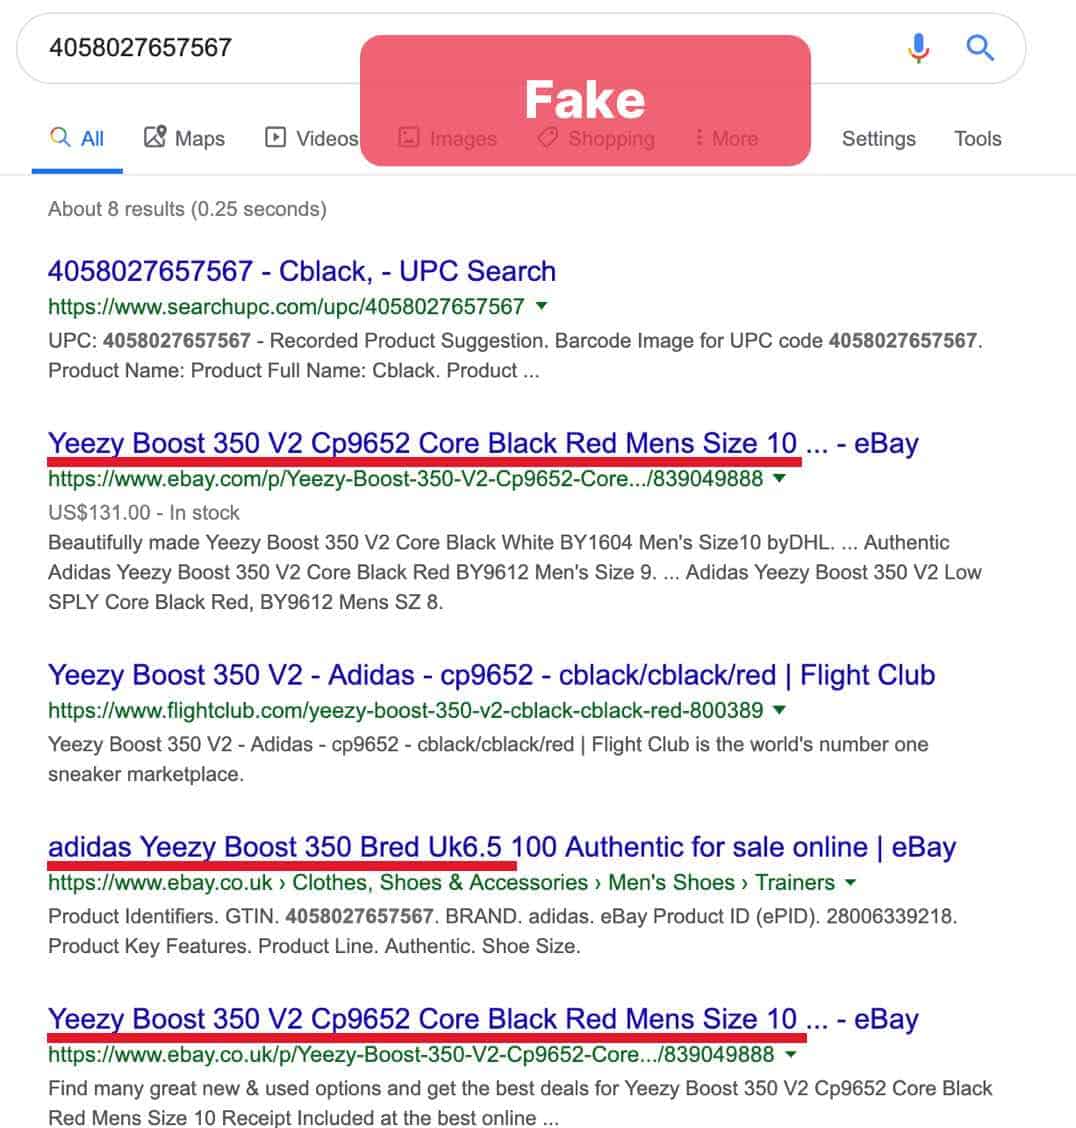 yeezy boost 350 ebay fake